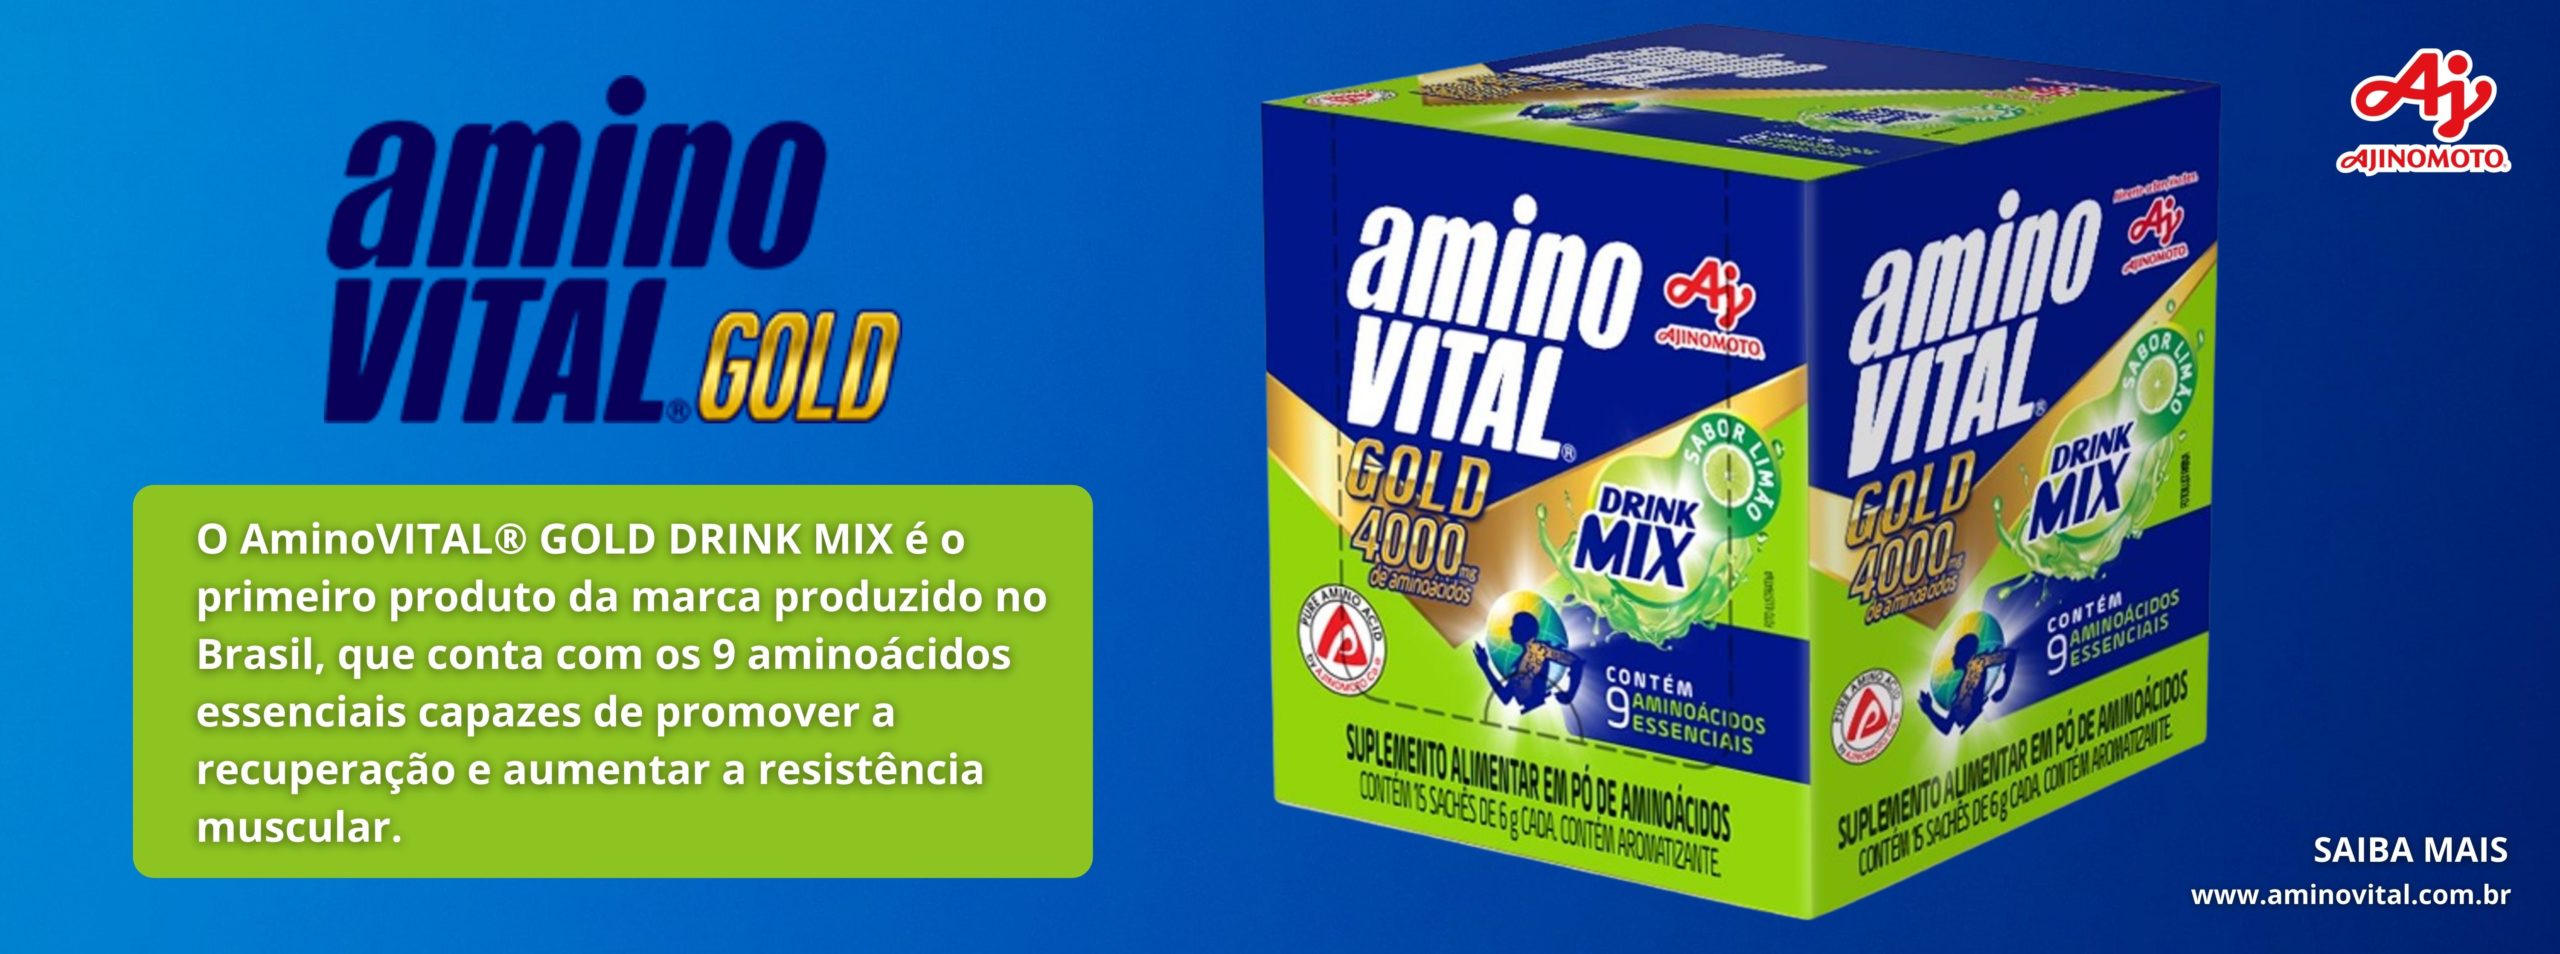 https://www.aminovital.com.br/aminovital-r-gold-drink-mix-ajinomoto-15-saches/p